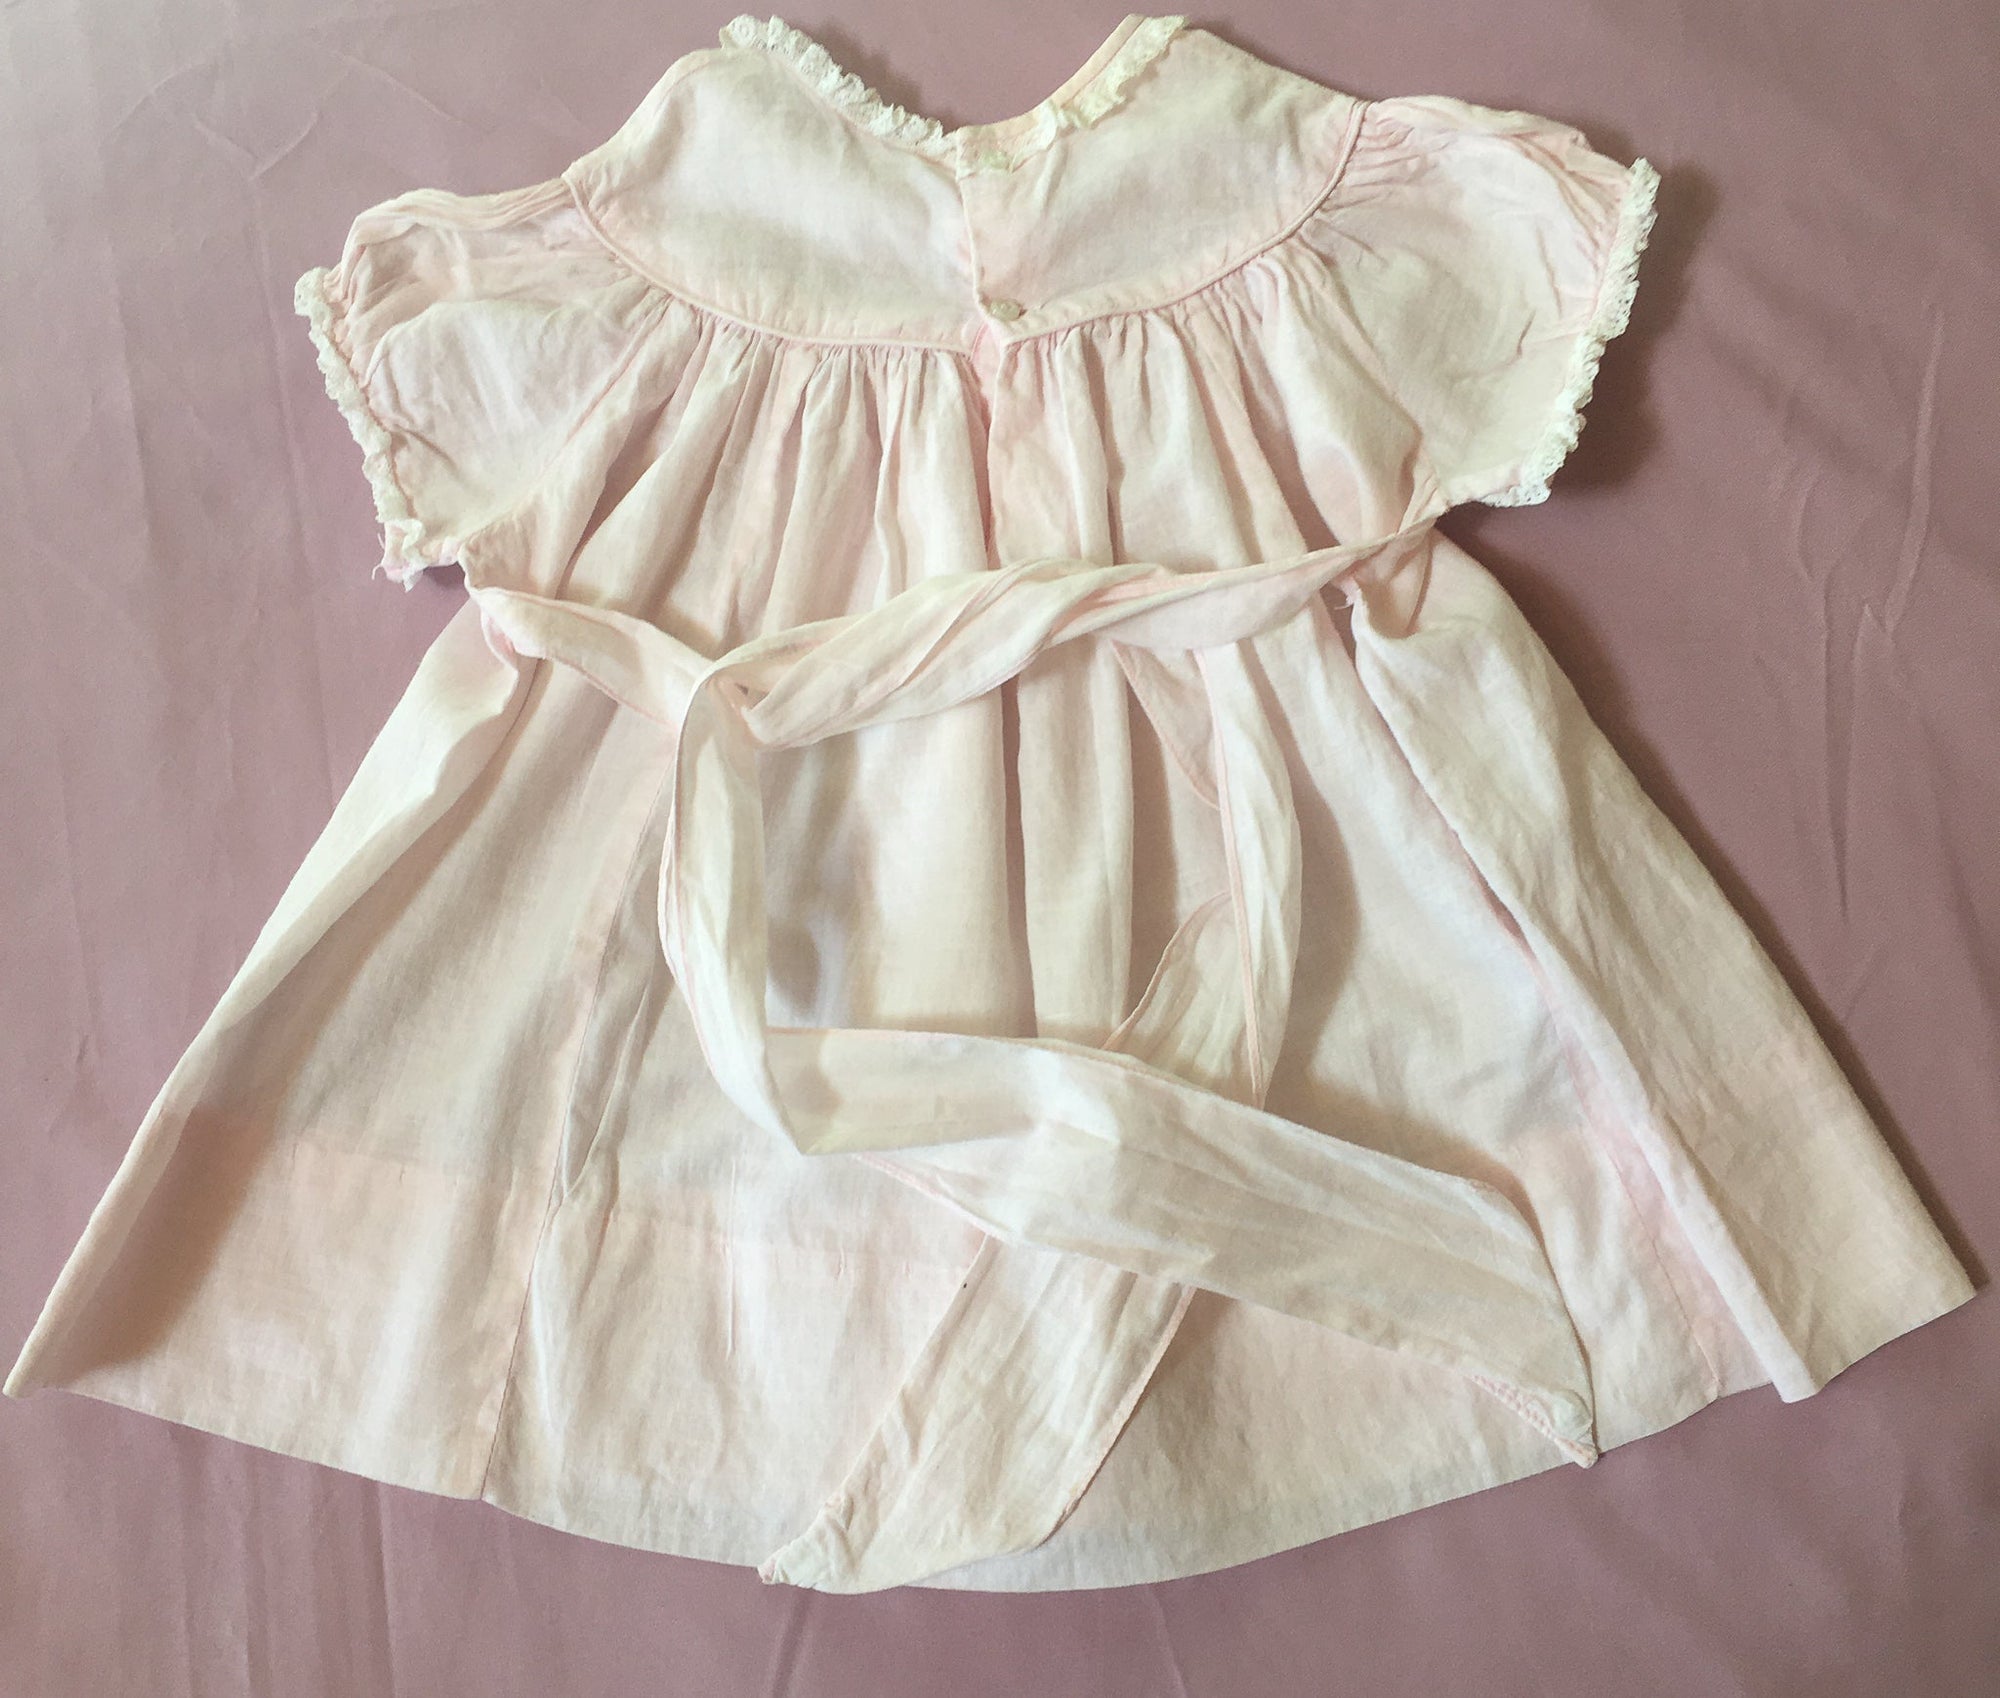 Vintage Baby Bundle, 2 Mid Century Cotton Dresses with 1 Slip, White Stockings, 1940’s 4 Oz. Bottle